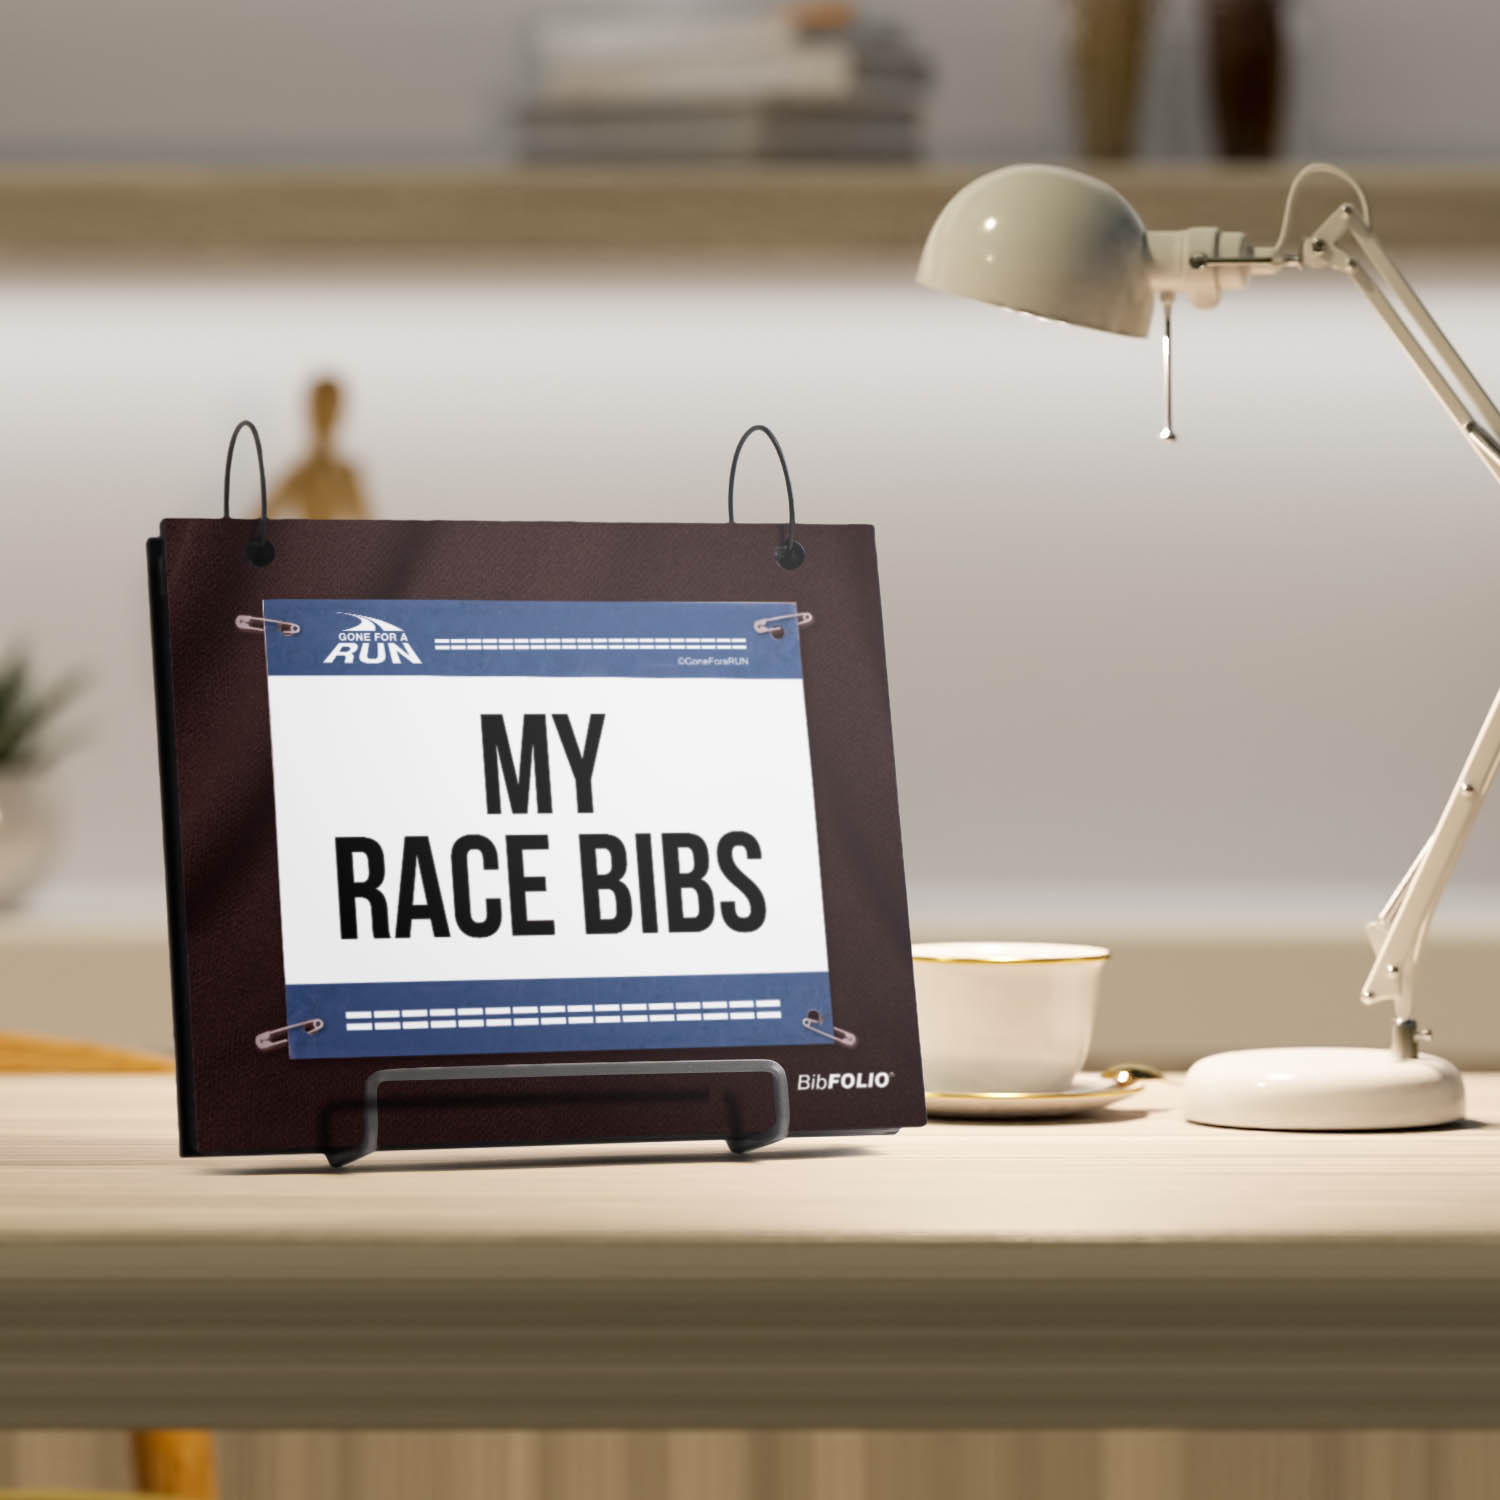 Oh Snap - My Race Bib is Finally Straight thanks to bibSNAPS! - Run Oregon